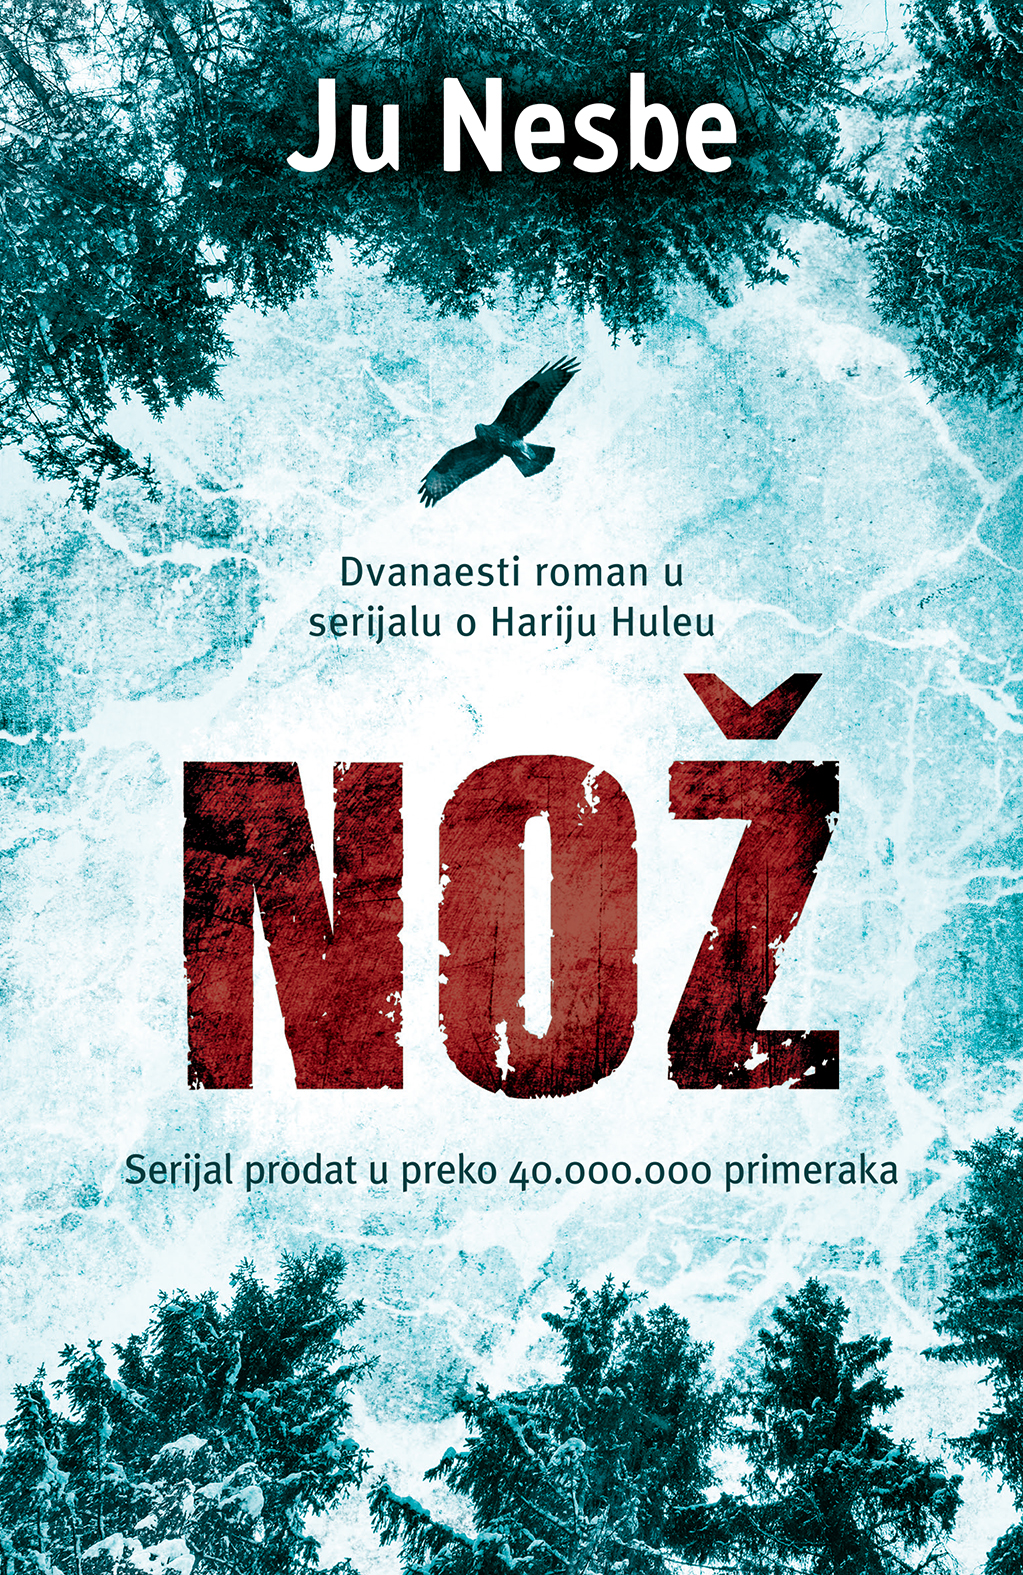 Stie dvanaesti roman u serijalu o inspektoru Hariju Huleu!, foto: Promo